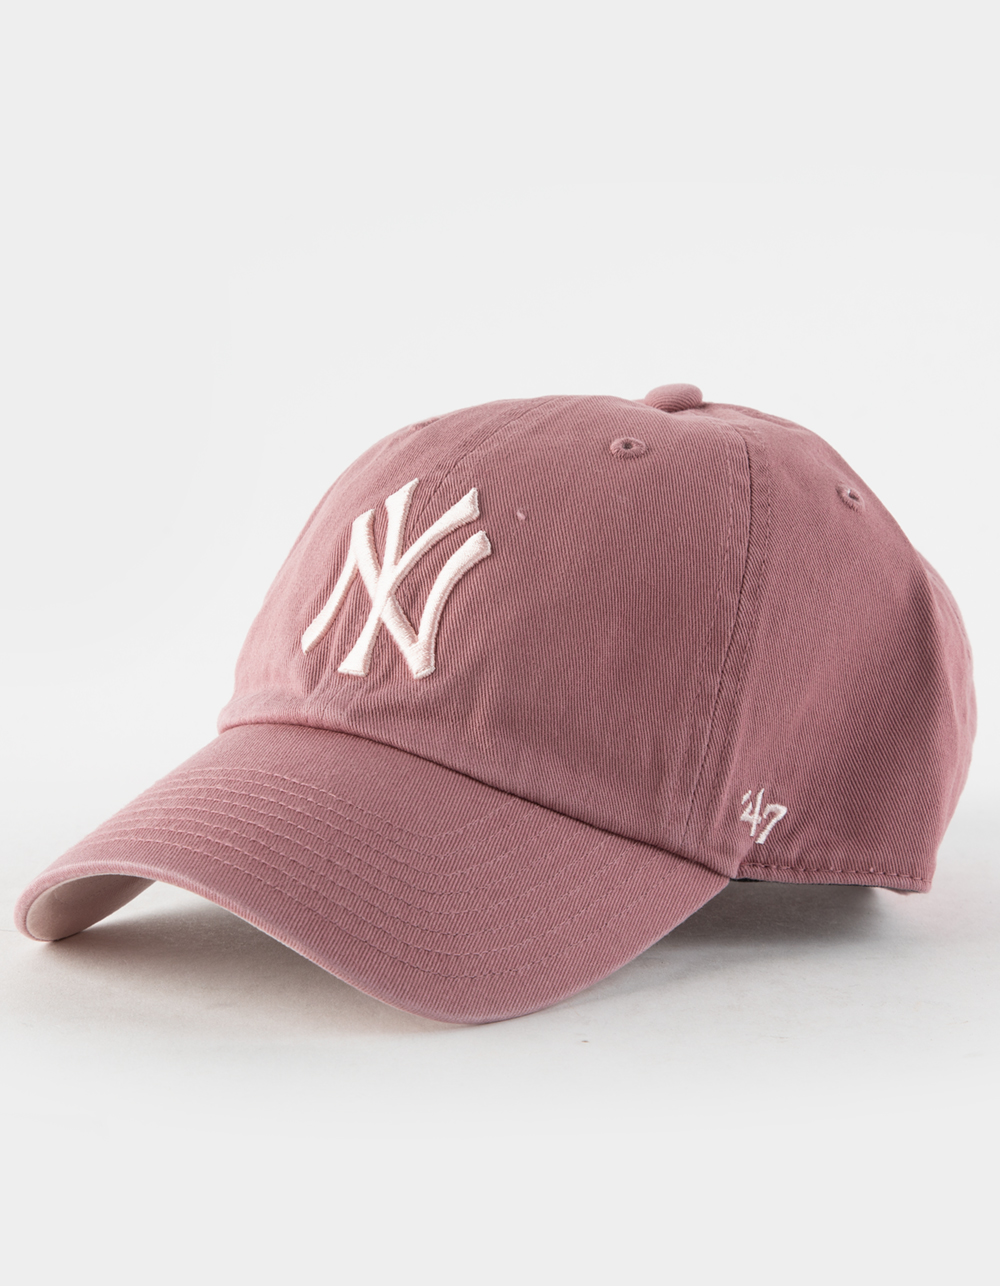 47 BRAND New York Yankees 47 Clean Up Strapback Hat